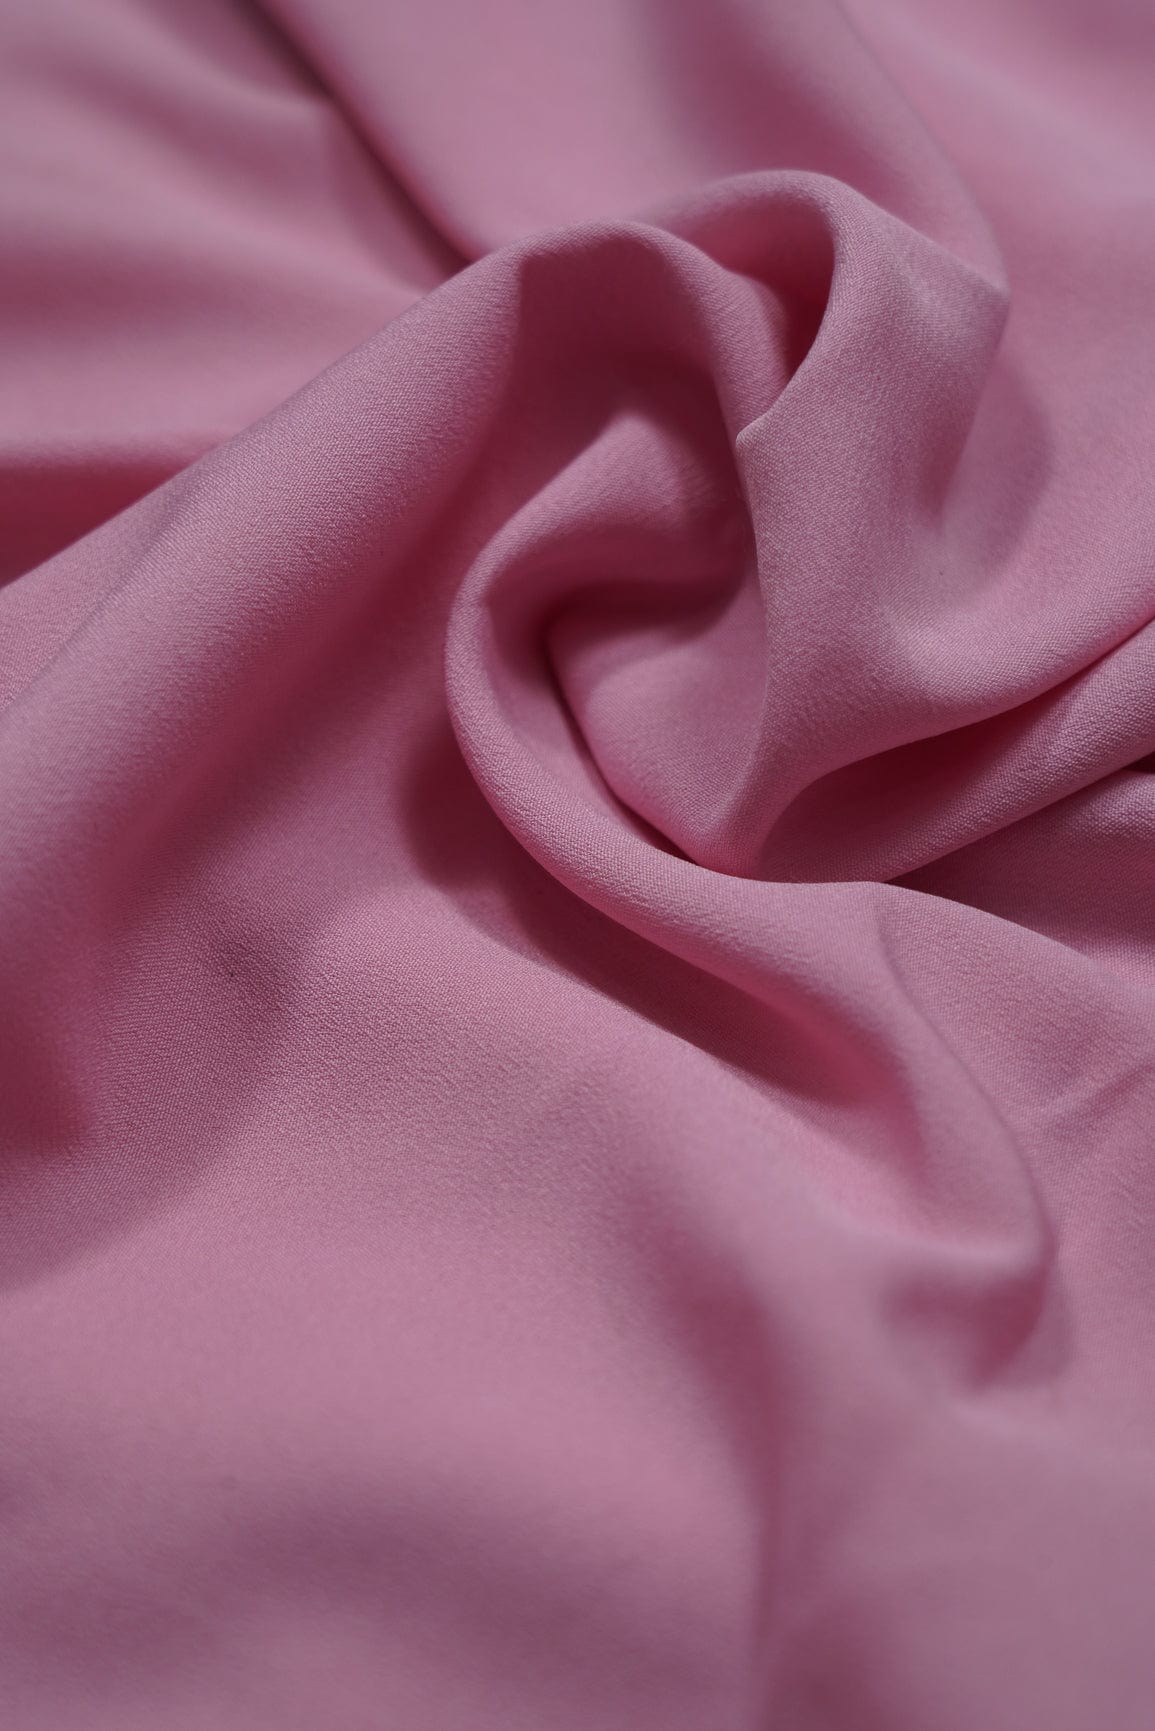 doeraa Plain Fabrics Baby Pink Dyed Crepe Fabric